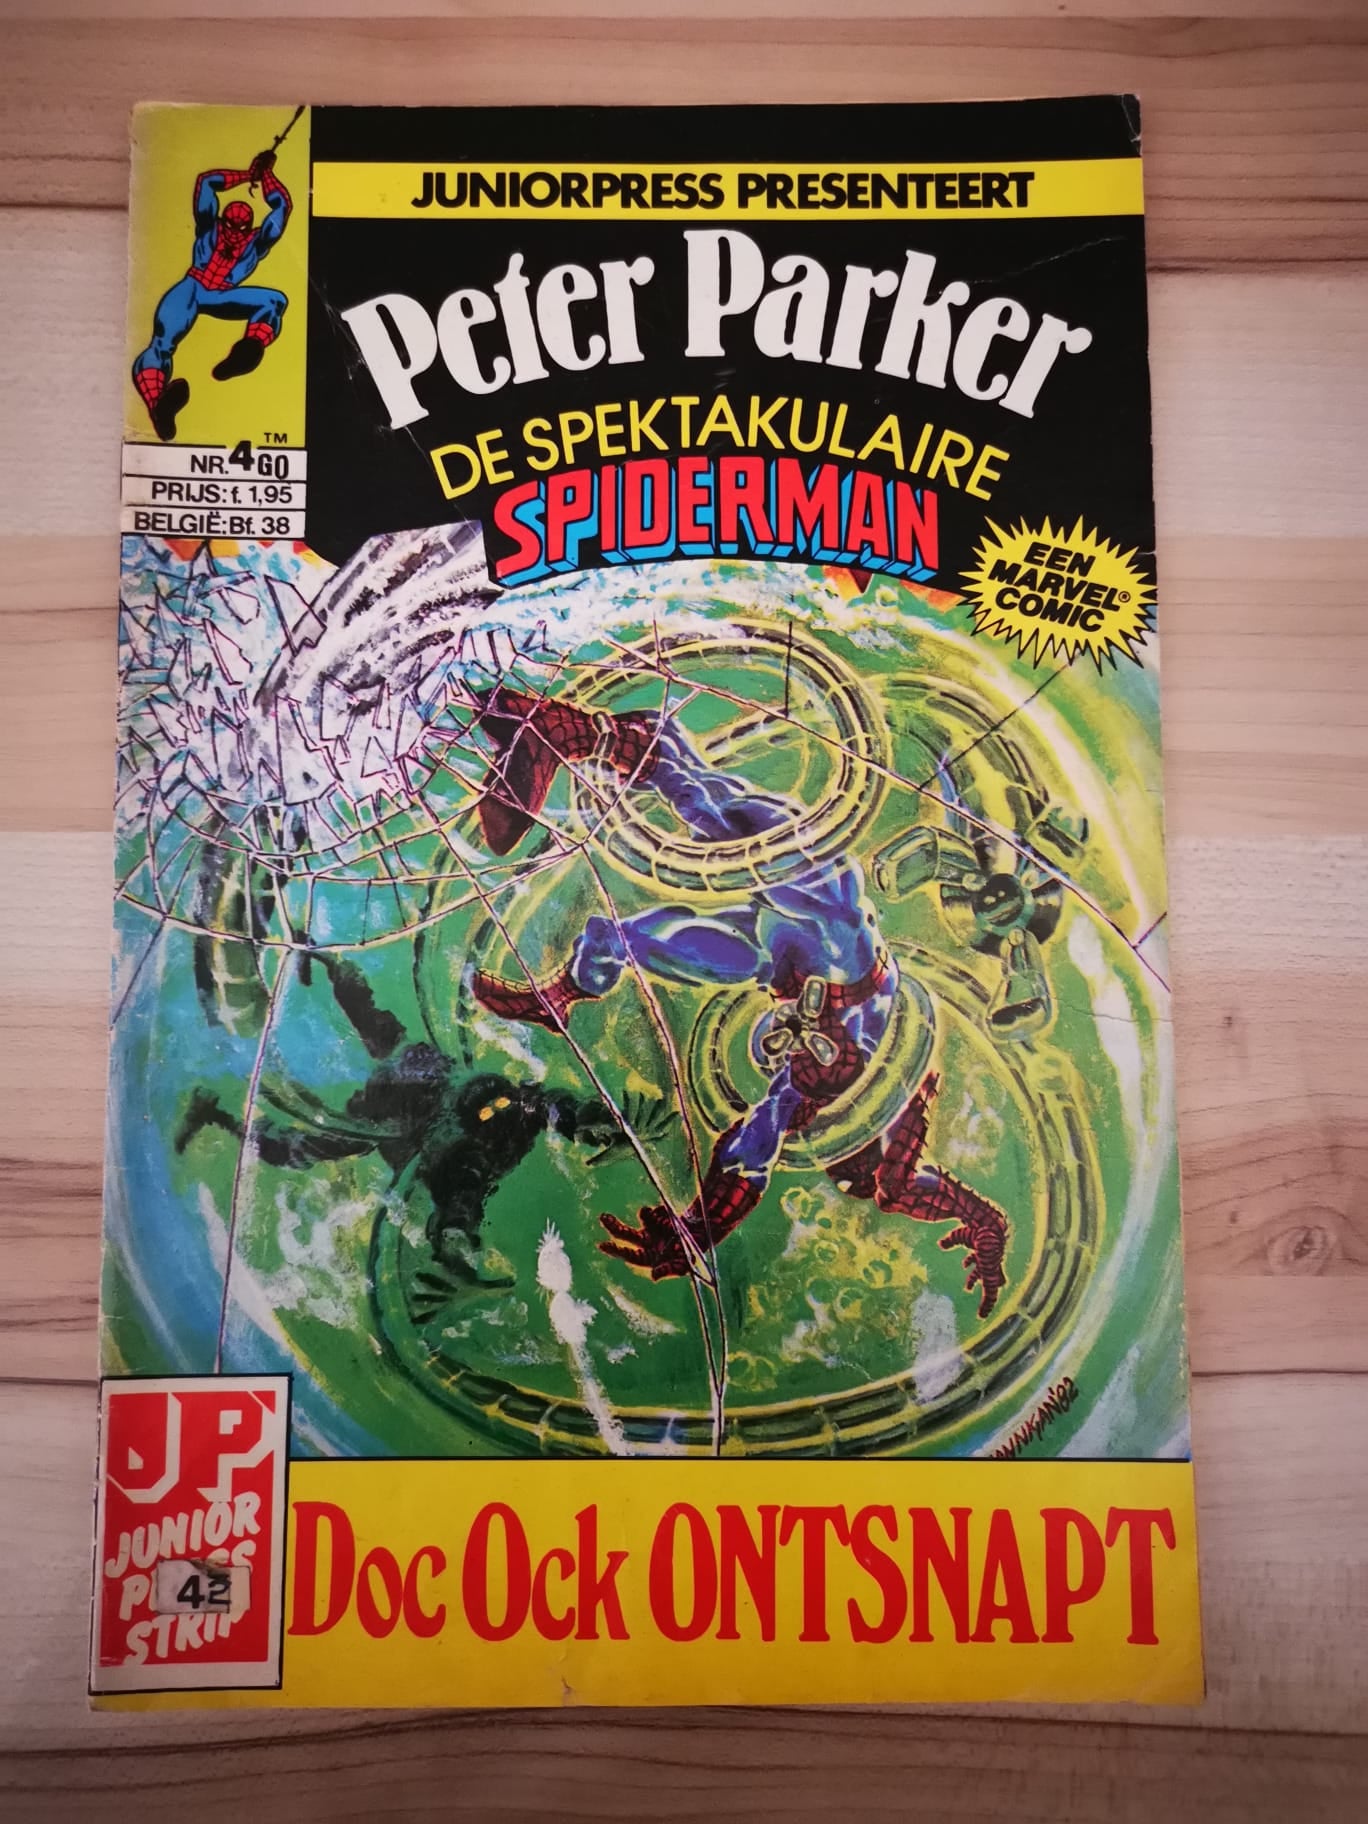 Peter Parker De spektakulaire spiderman #4